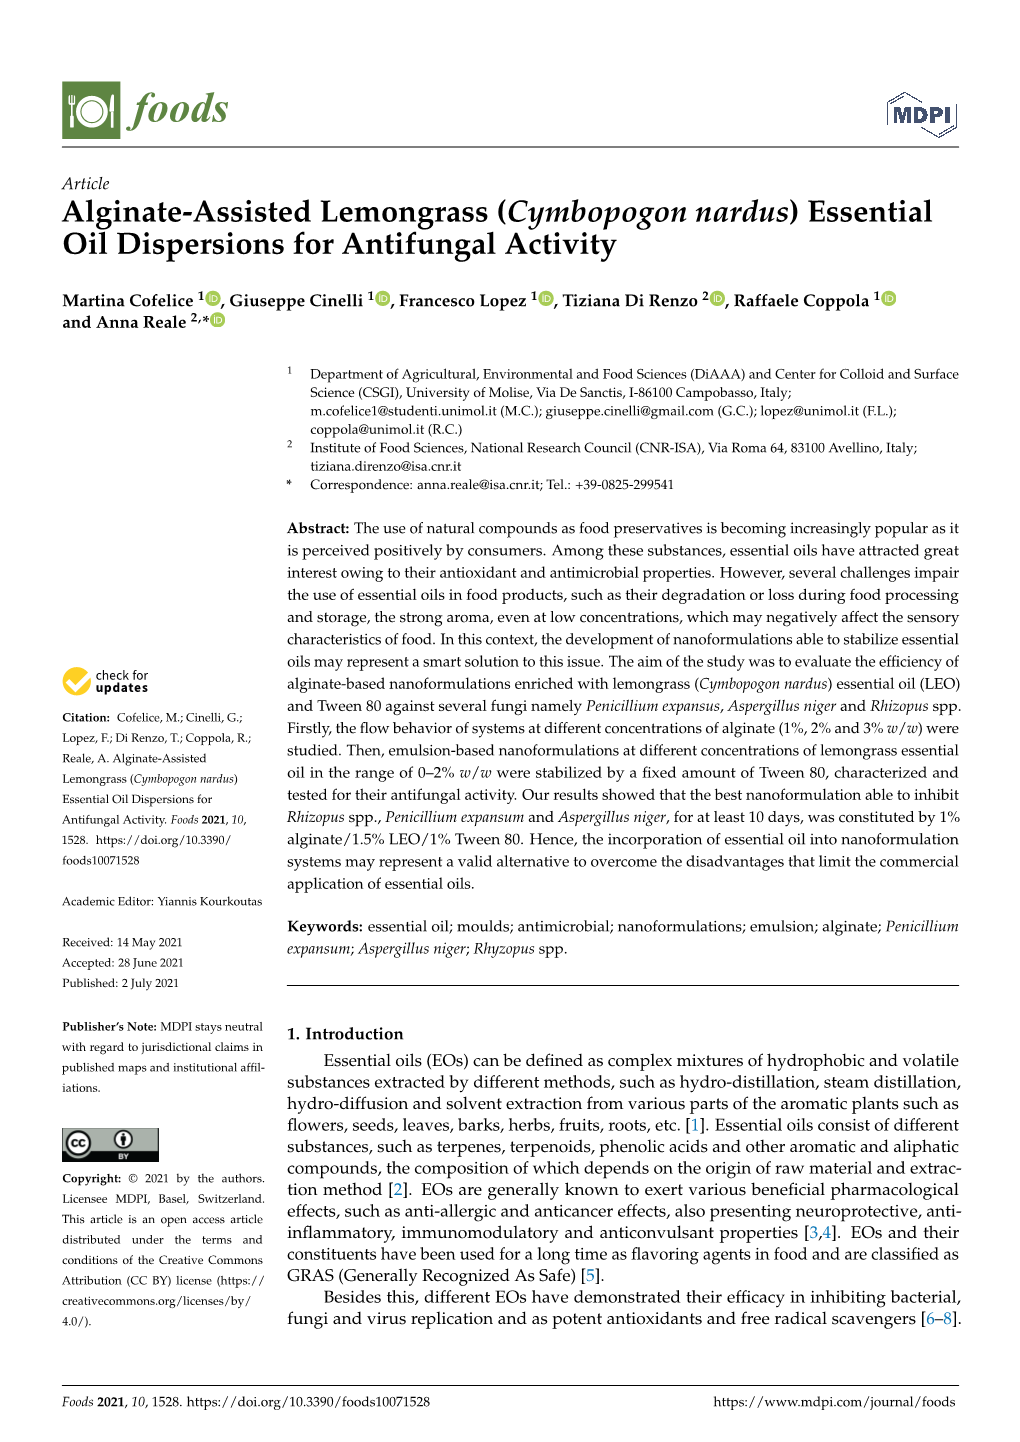 (Cymbopogon Nardus) Essential Oil Dispersions for Antifungal Activity